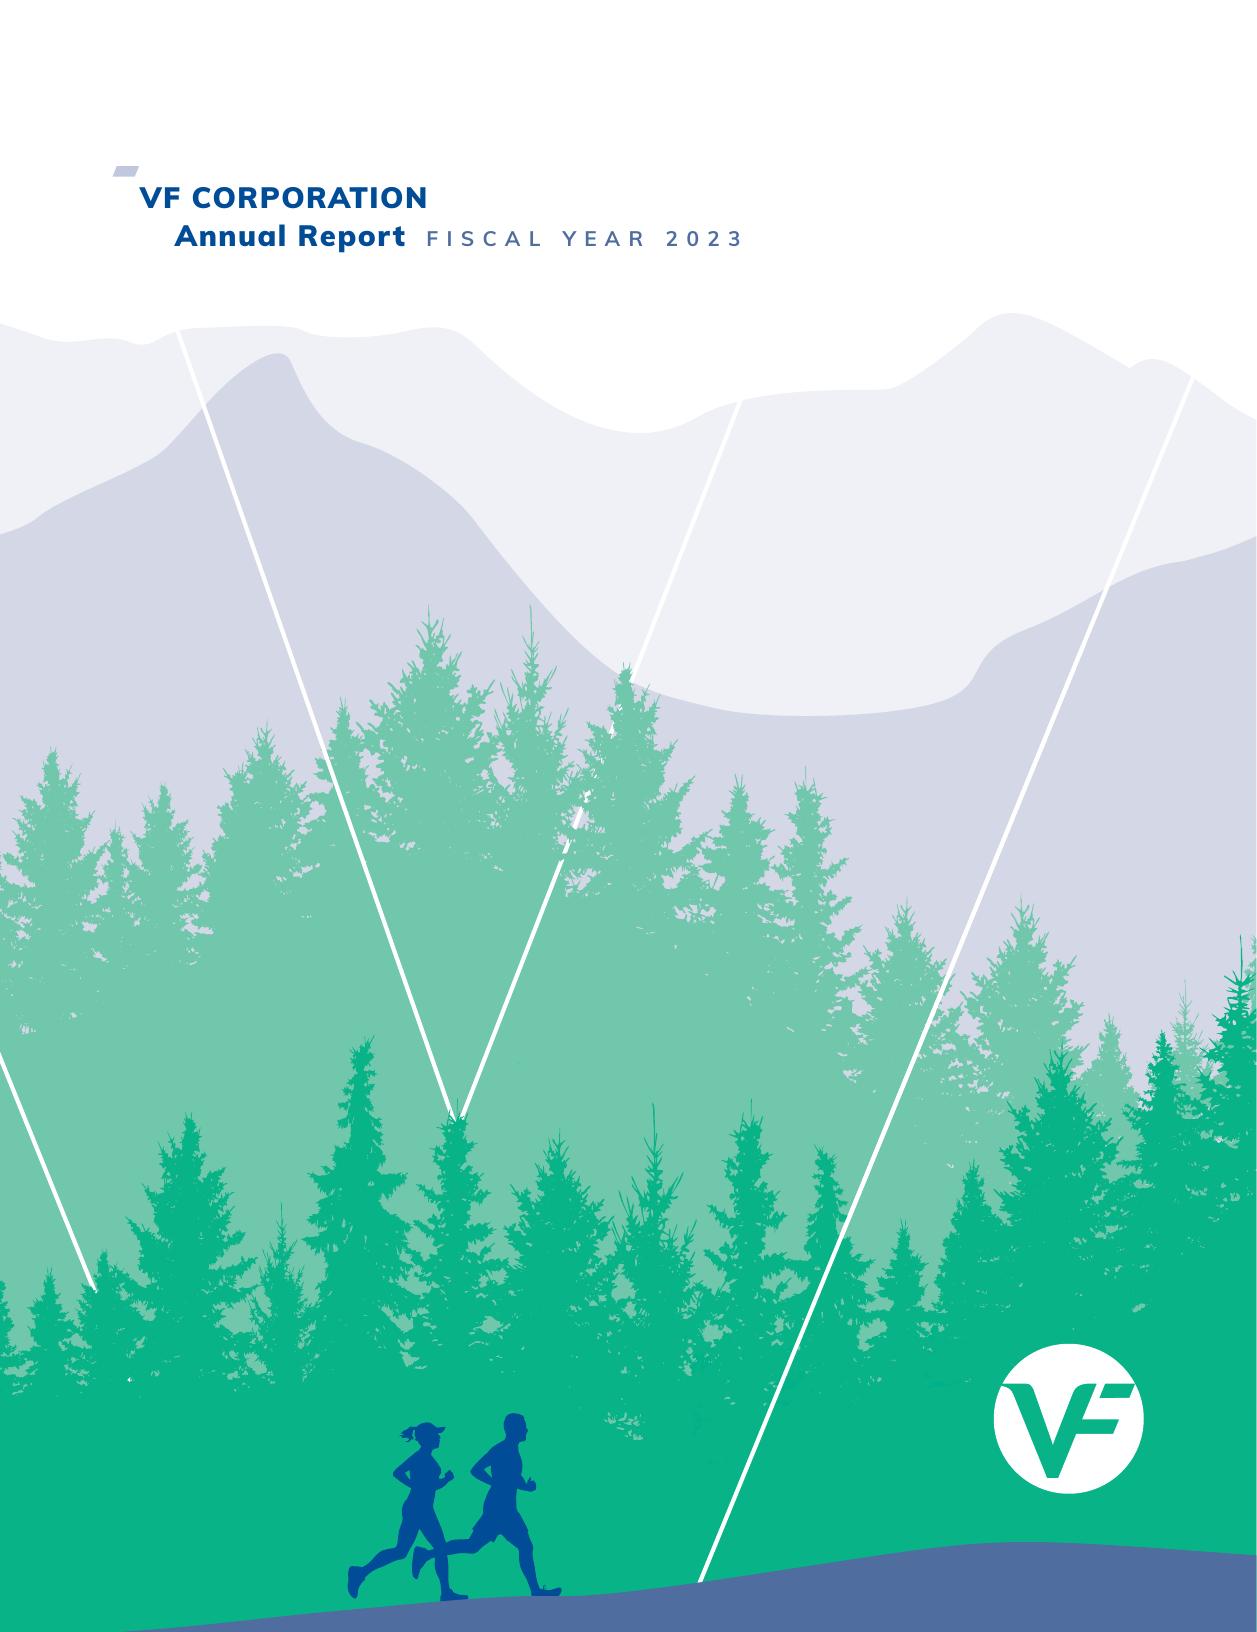 ABERDEENAIRPORT 2023 Annual Report